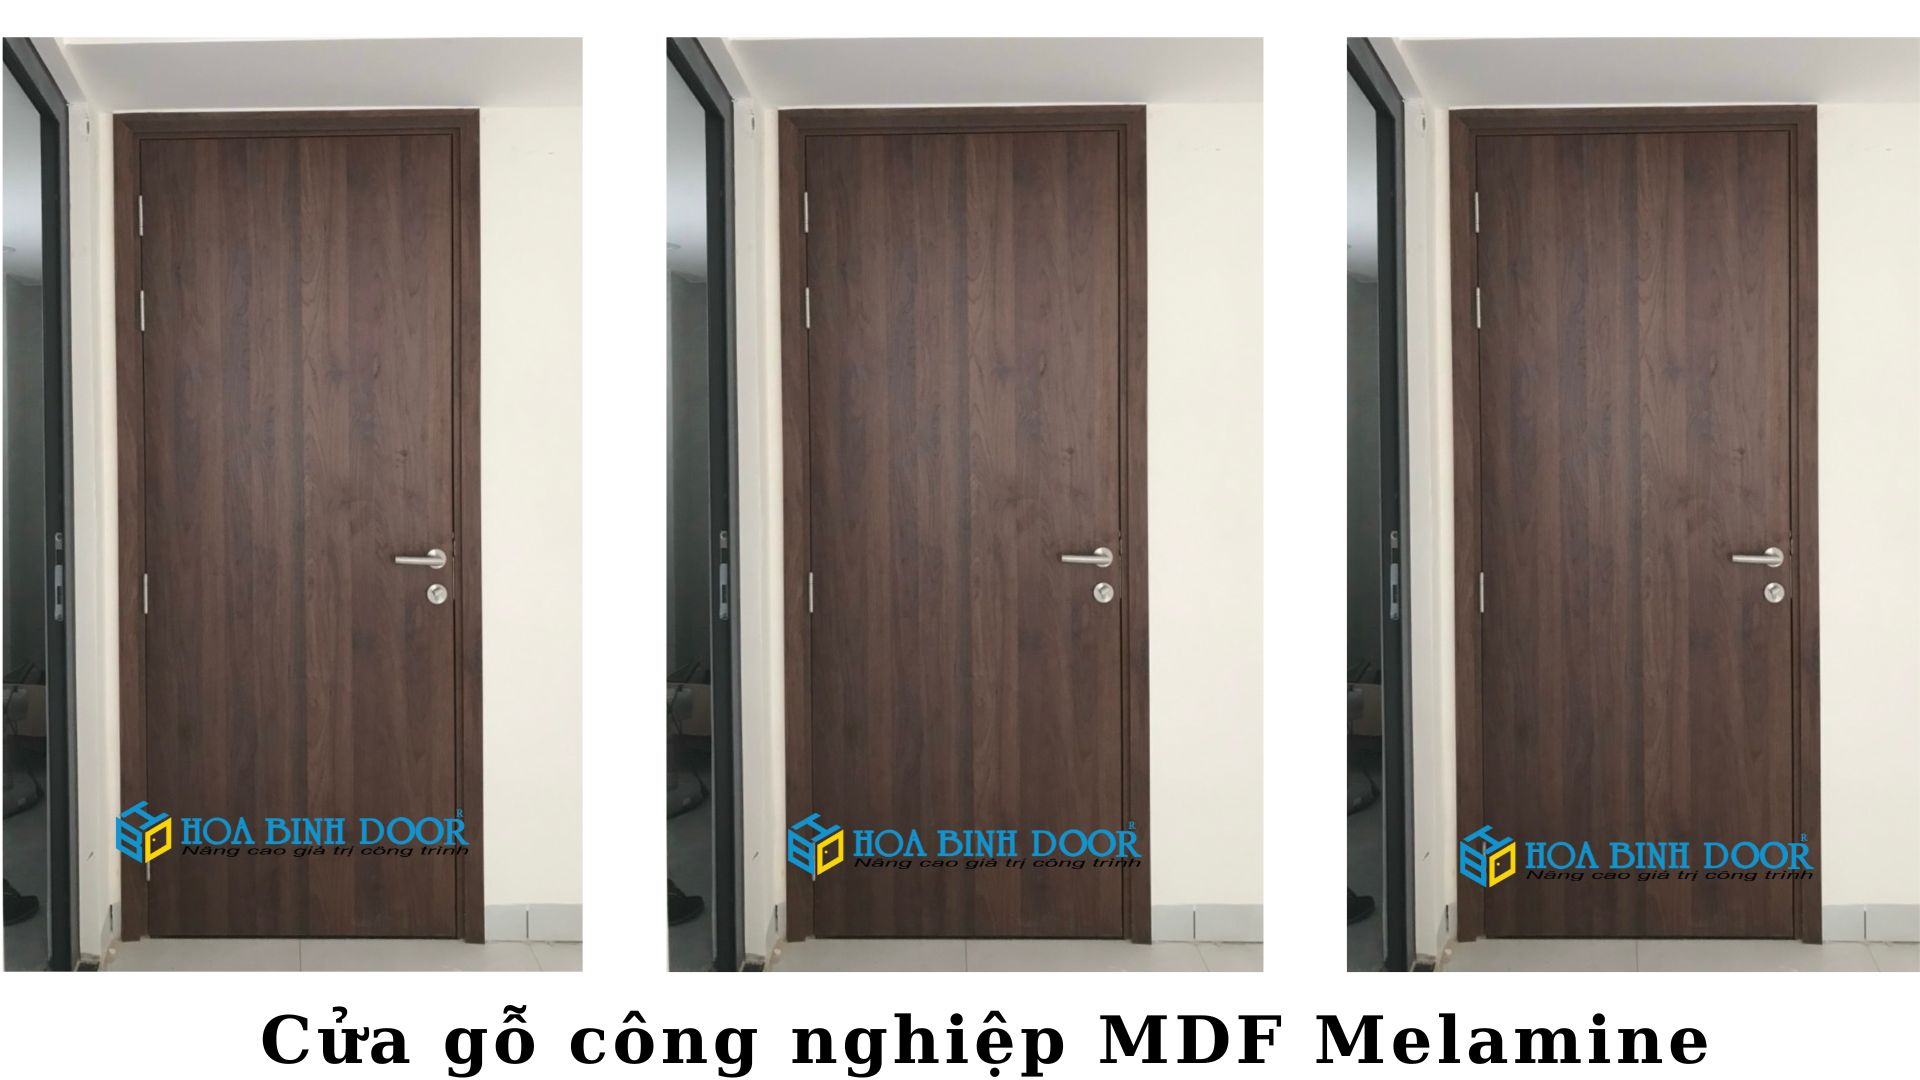 Cửa MDF Melamine tại Tân Bình